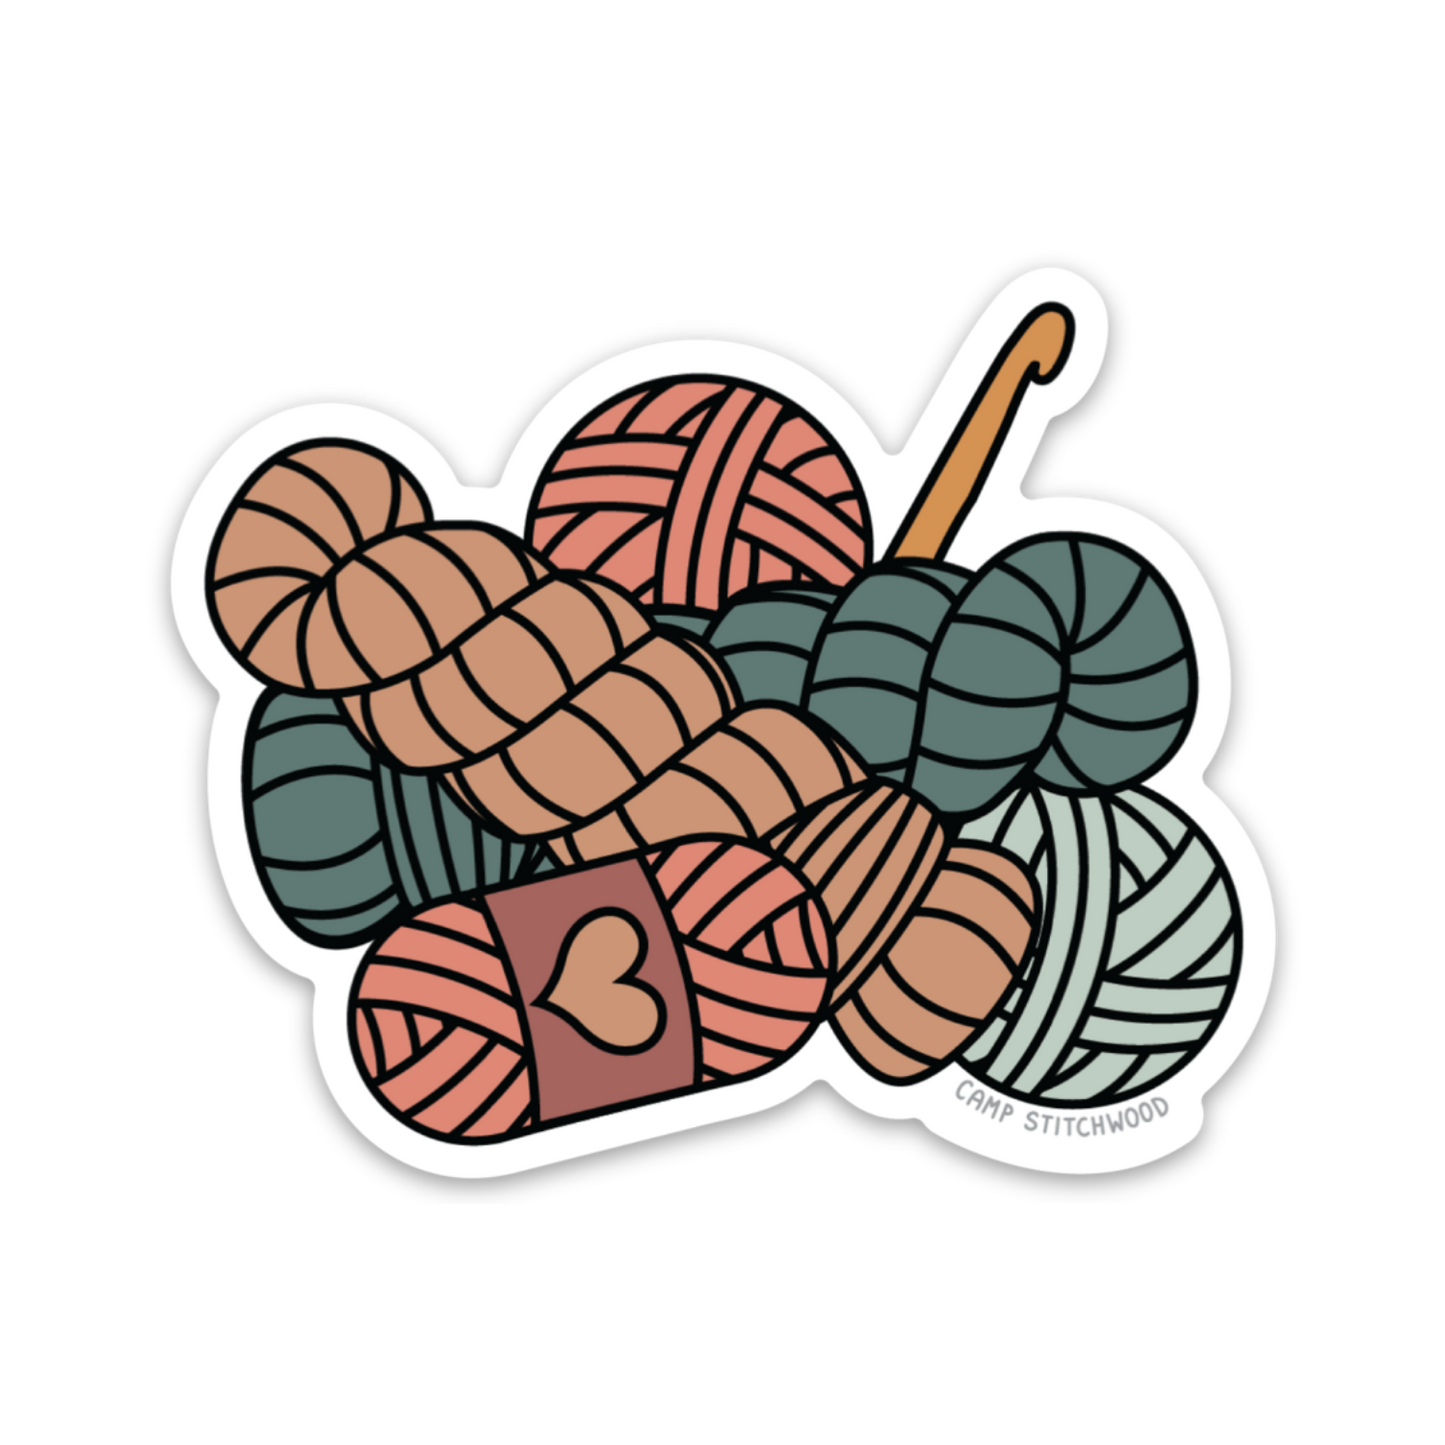 Crochet Love Sticker